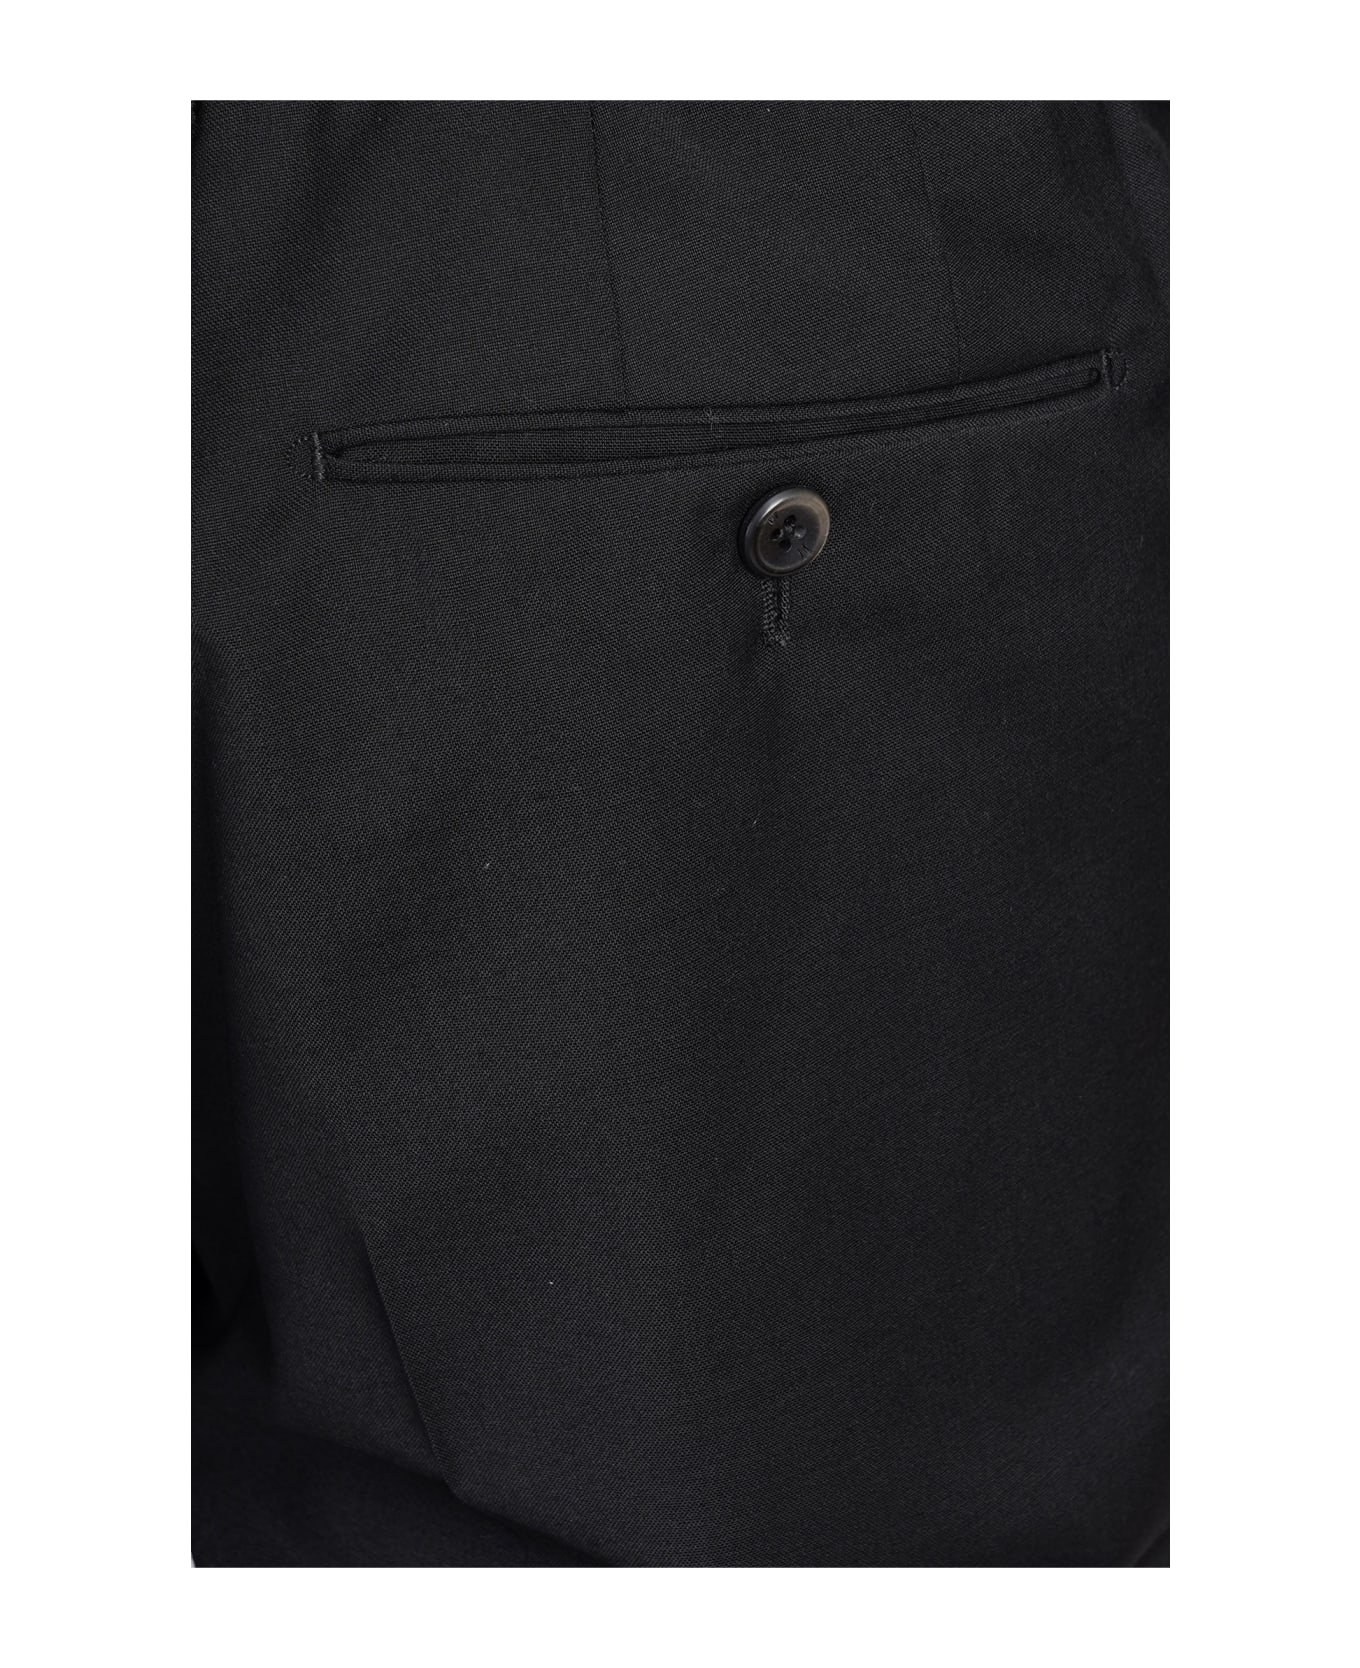 PT Torino Pants In Black Polyester - black